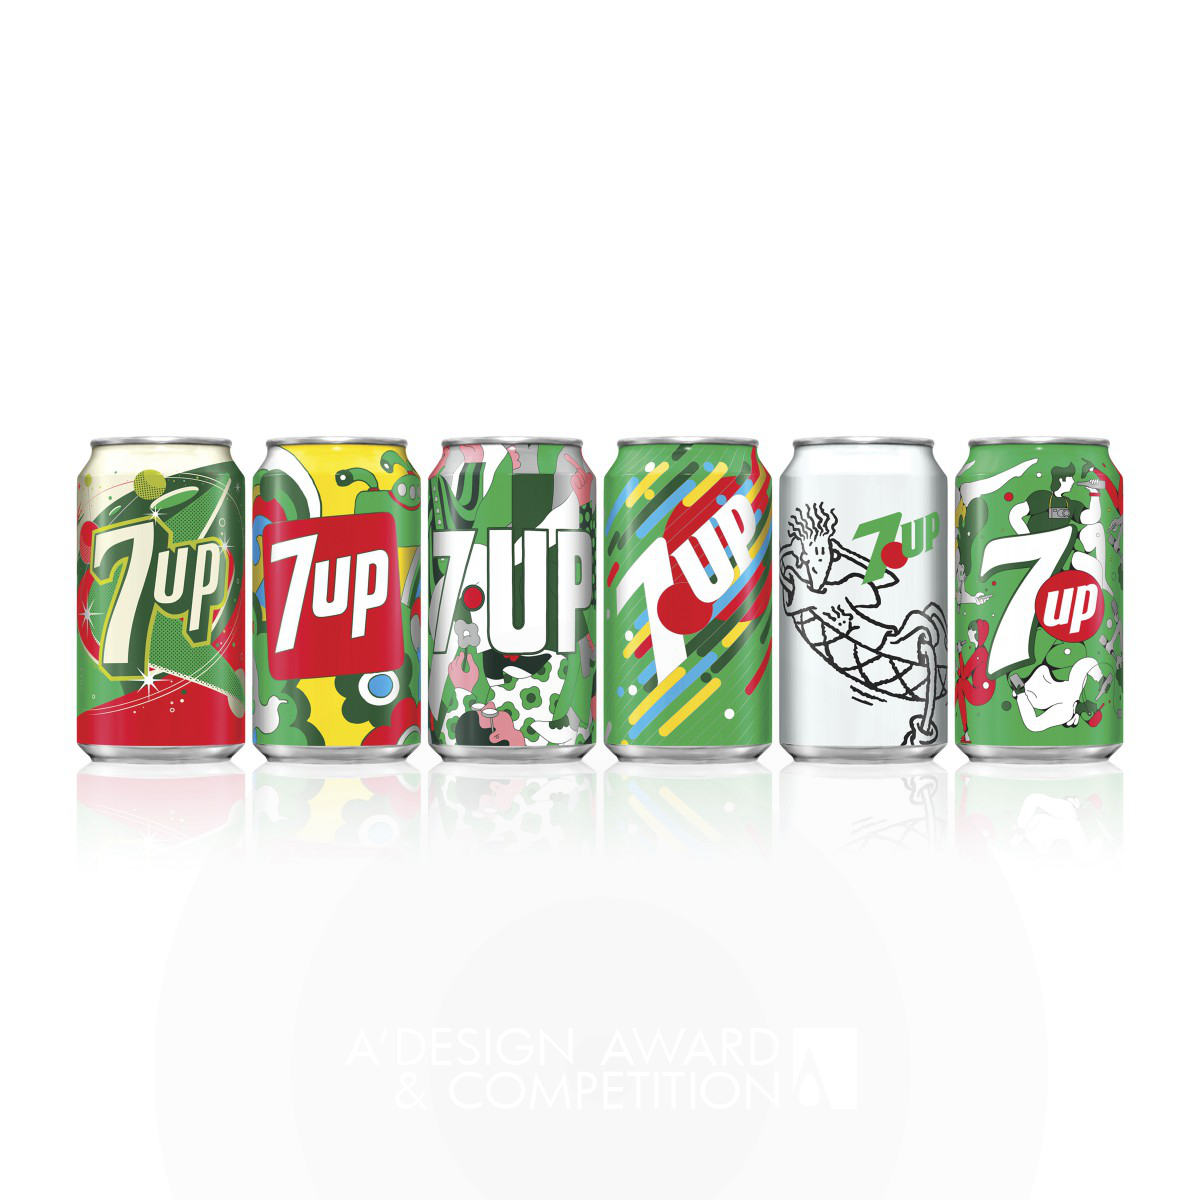 7UP Vintage Pack 2018 Beverage Packaging by PepsiCo Design & Innovation